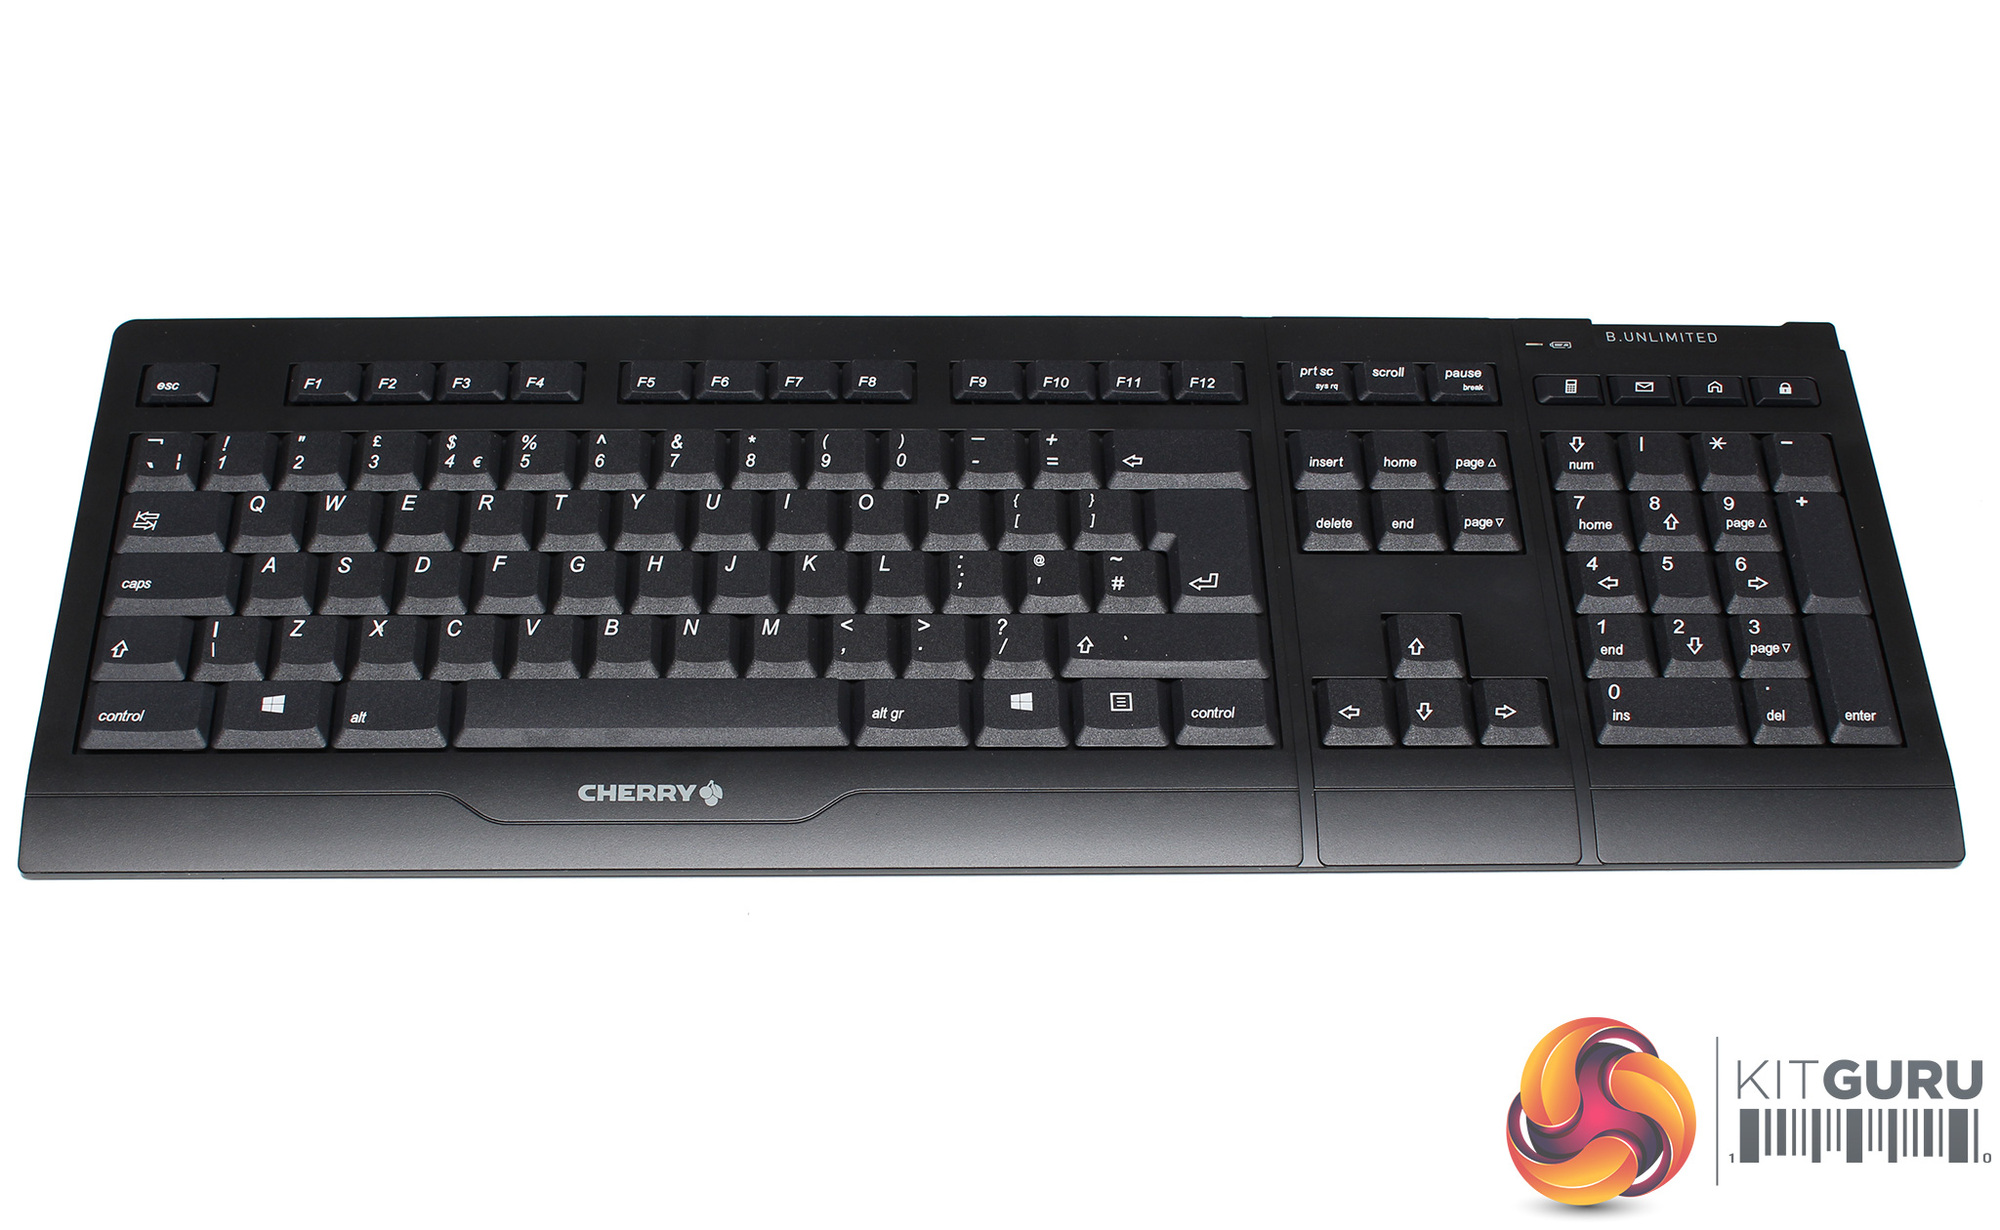 Cherry-B-Unlimited-3-Wireless-Desktop-Keyboard-and-Mouse-Review-on-KitGuru-Keyboard.jpg